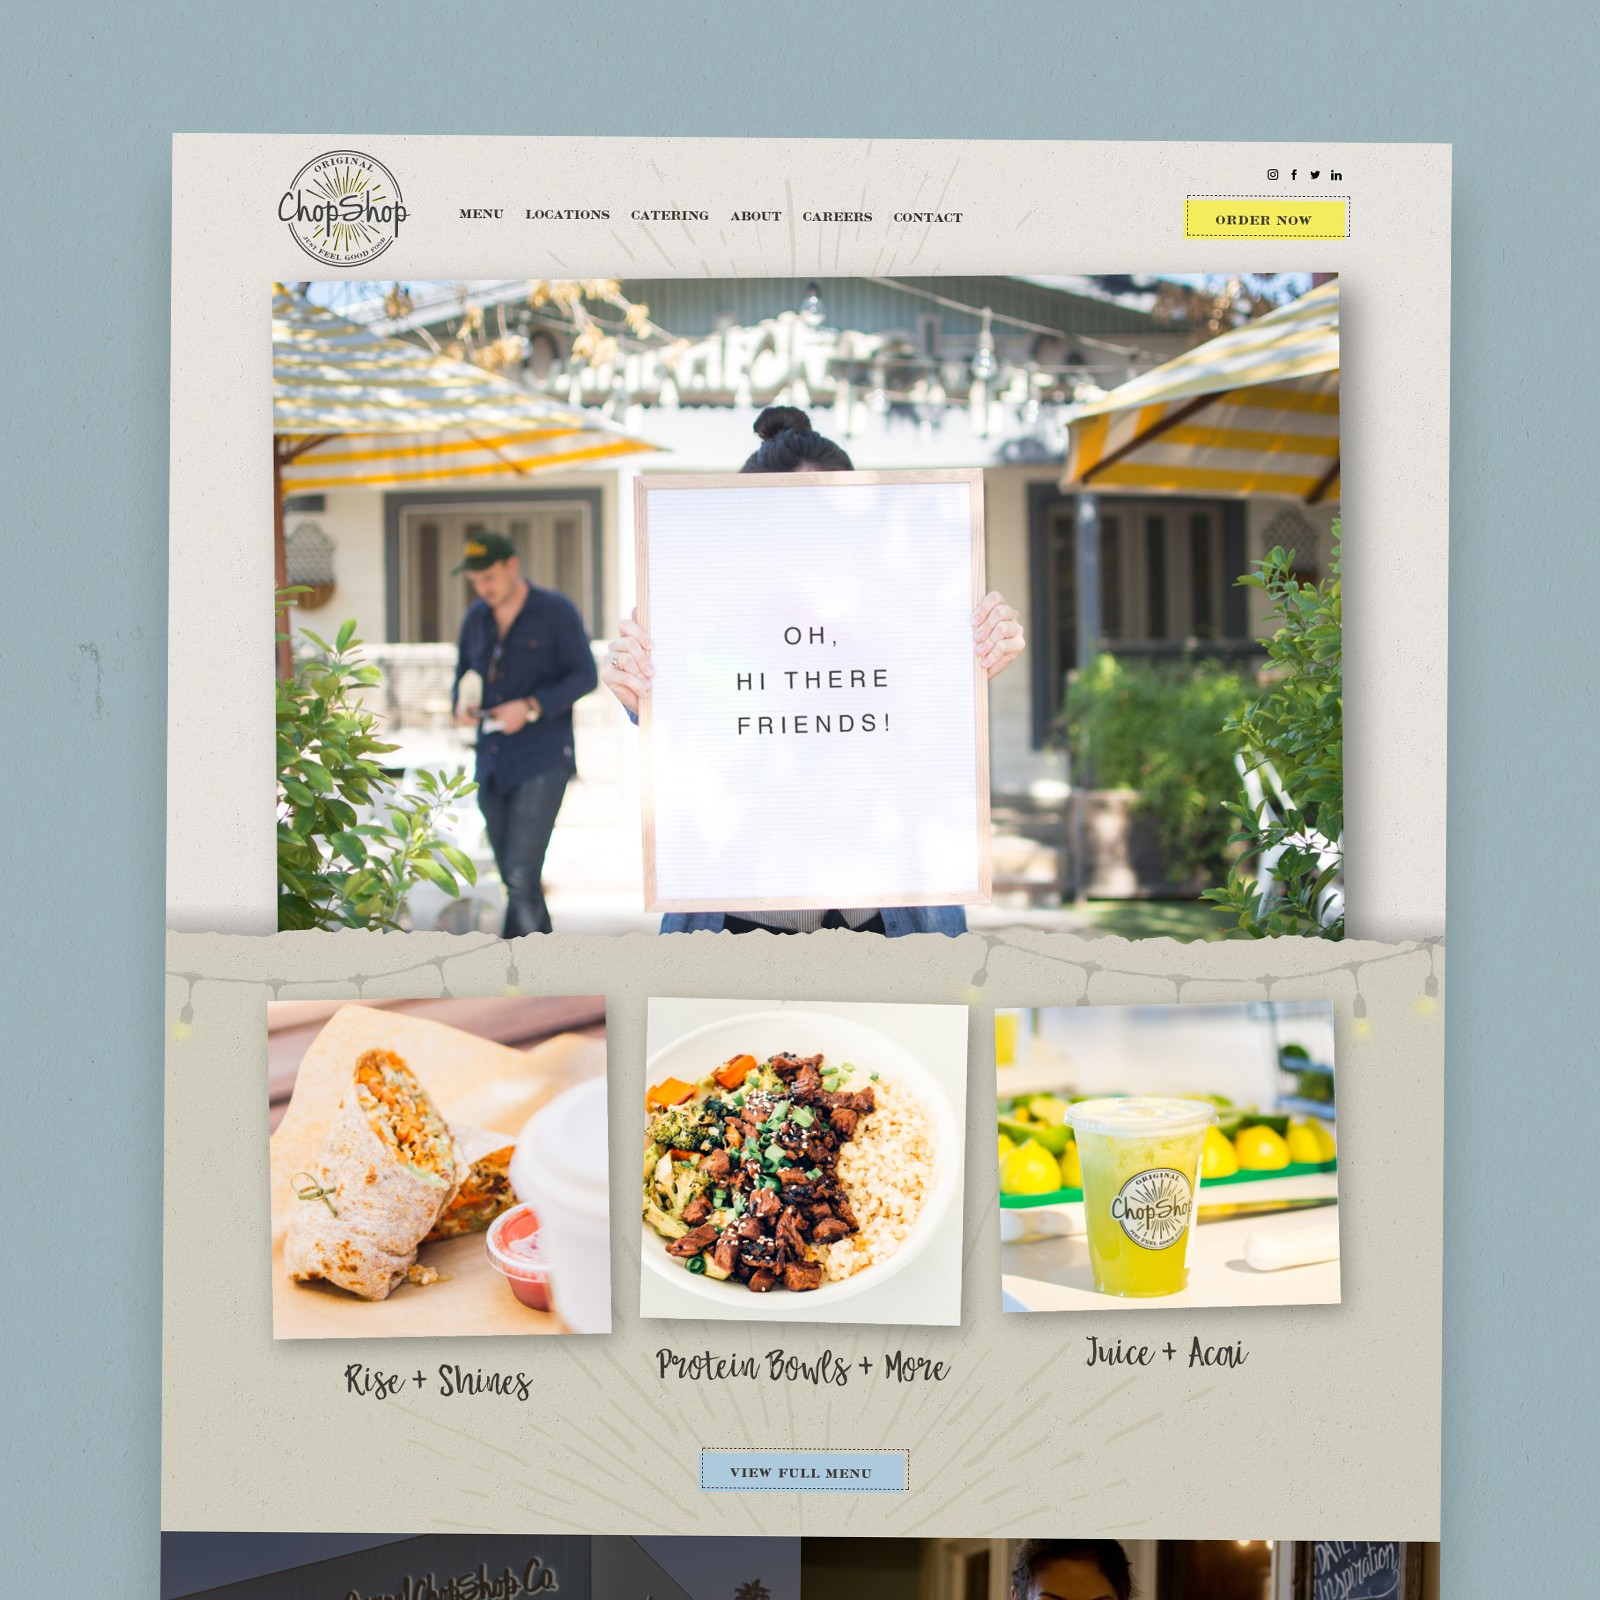 Original ChopShop Restaurant Website Design and Website Development